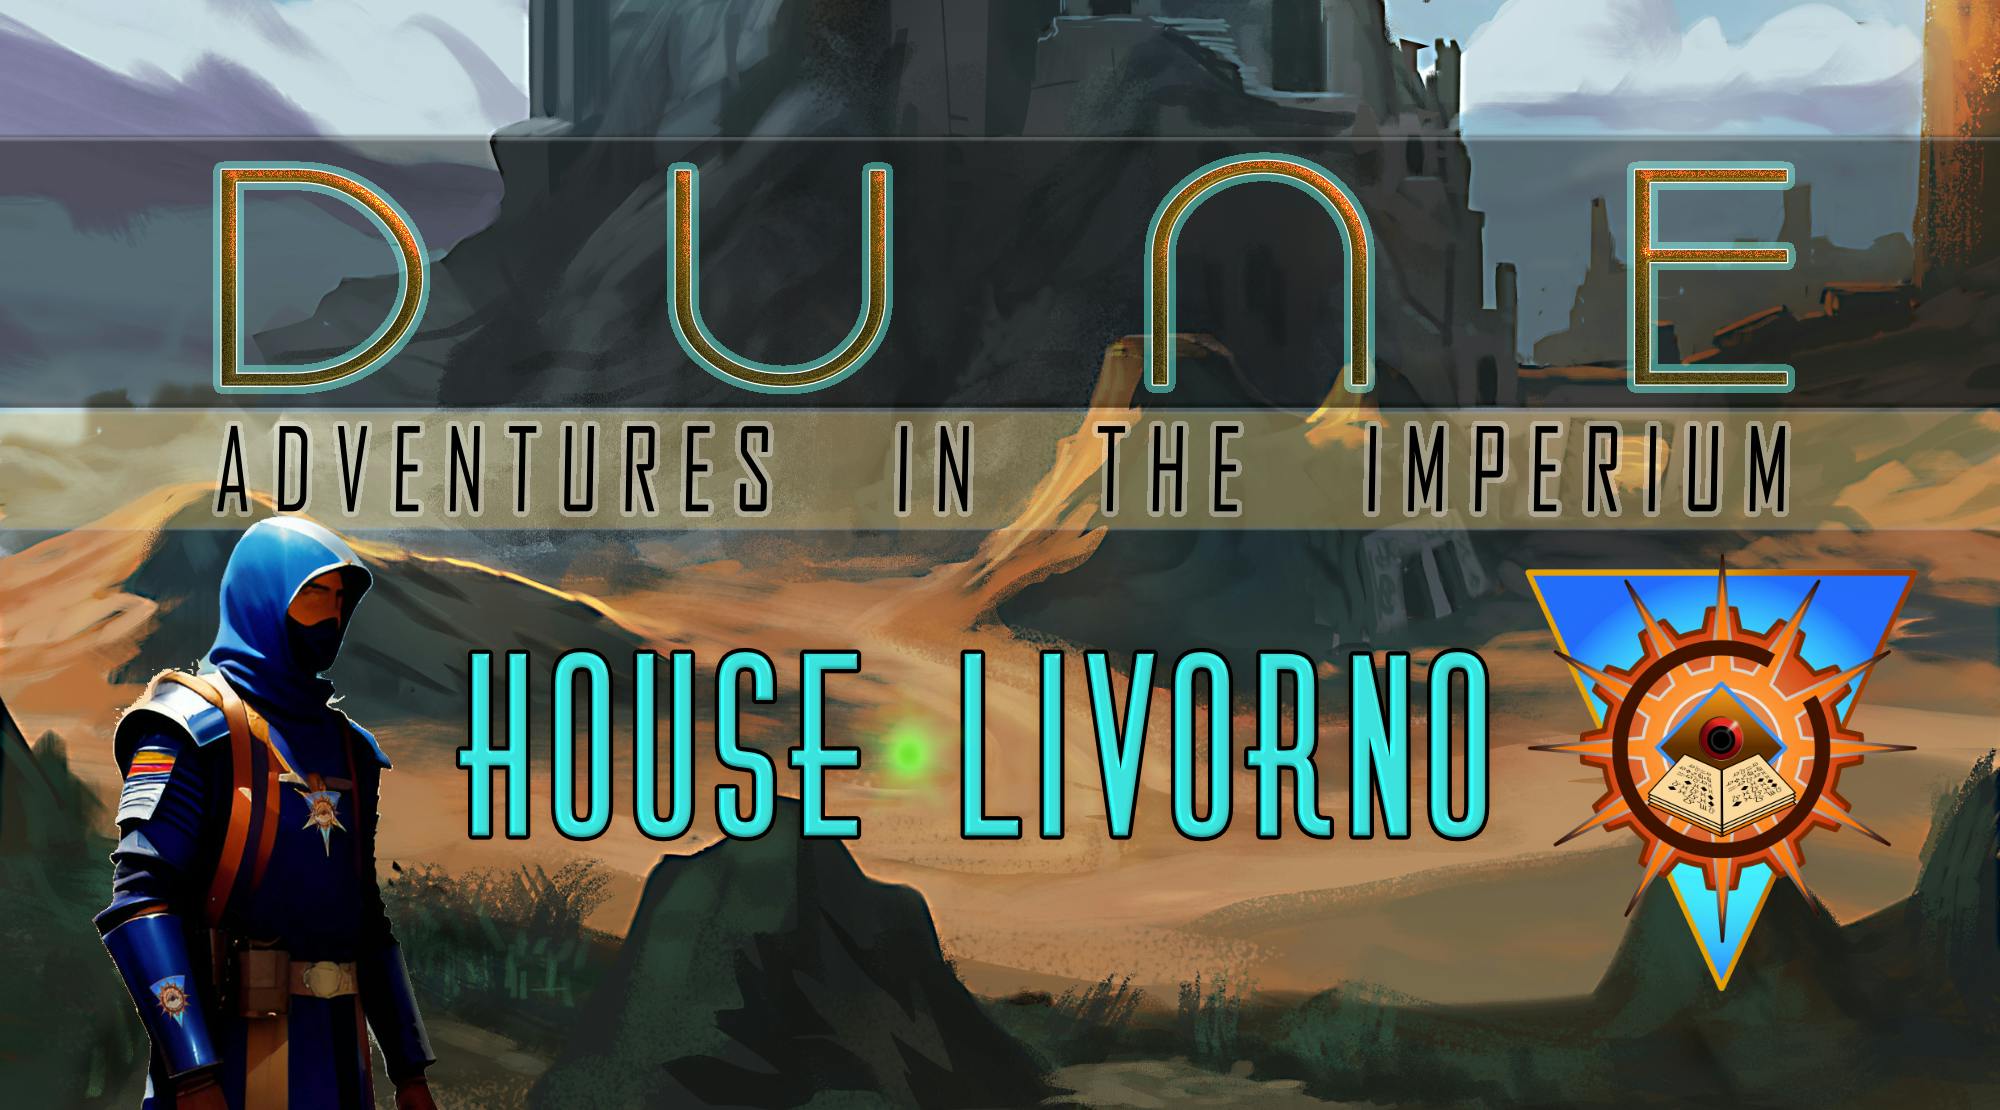 Dune - Adventures in the Imperium - House Livorno: The Eyes of Arrakis